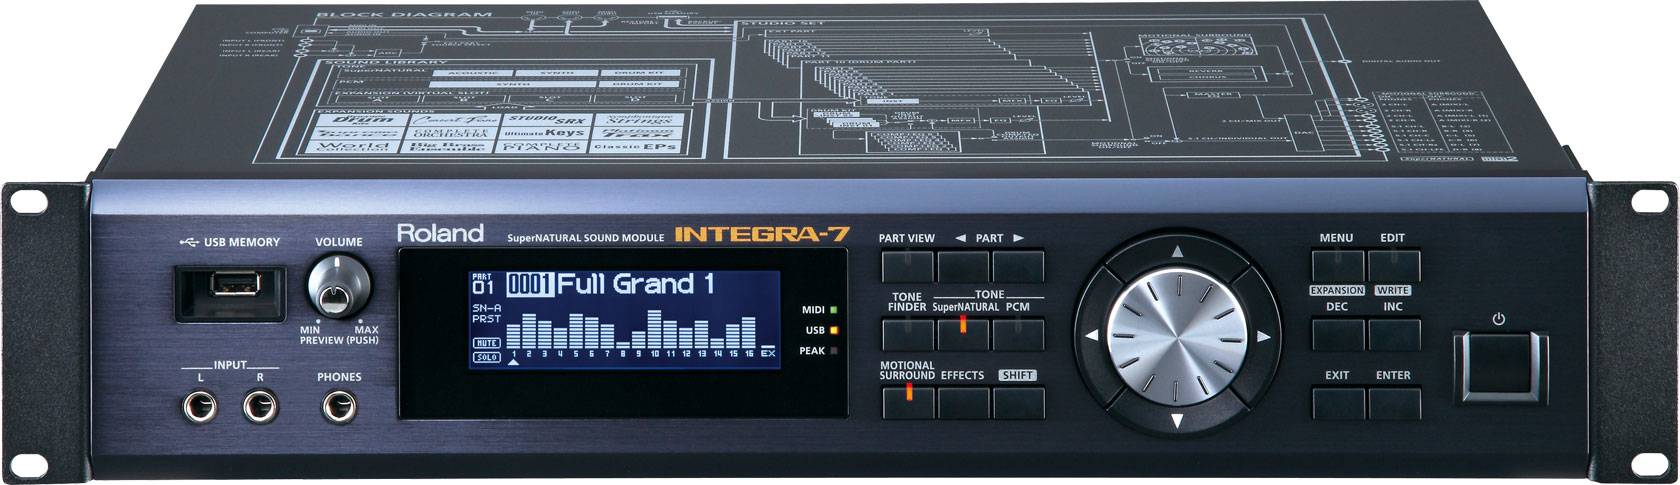 Roland INTEGRA 7 Digital Synthesizer